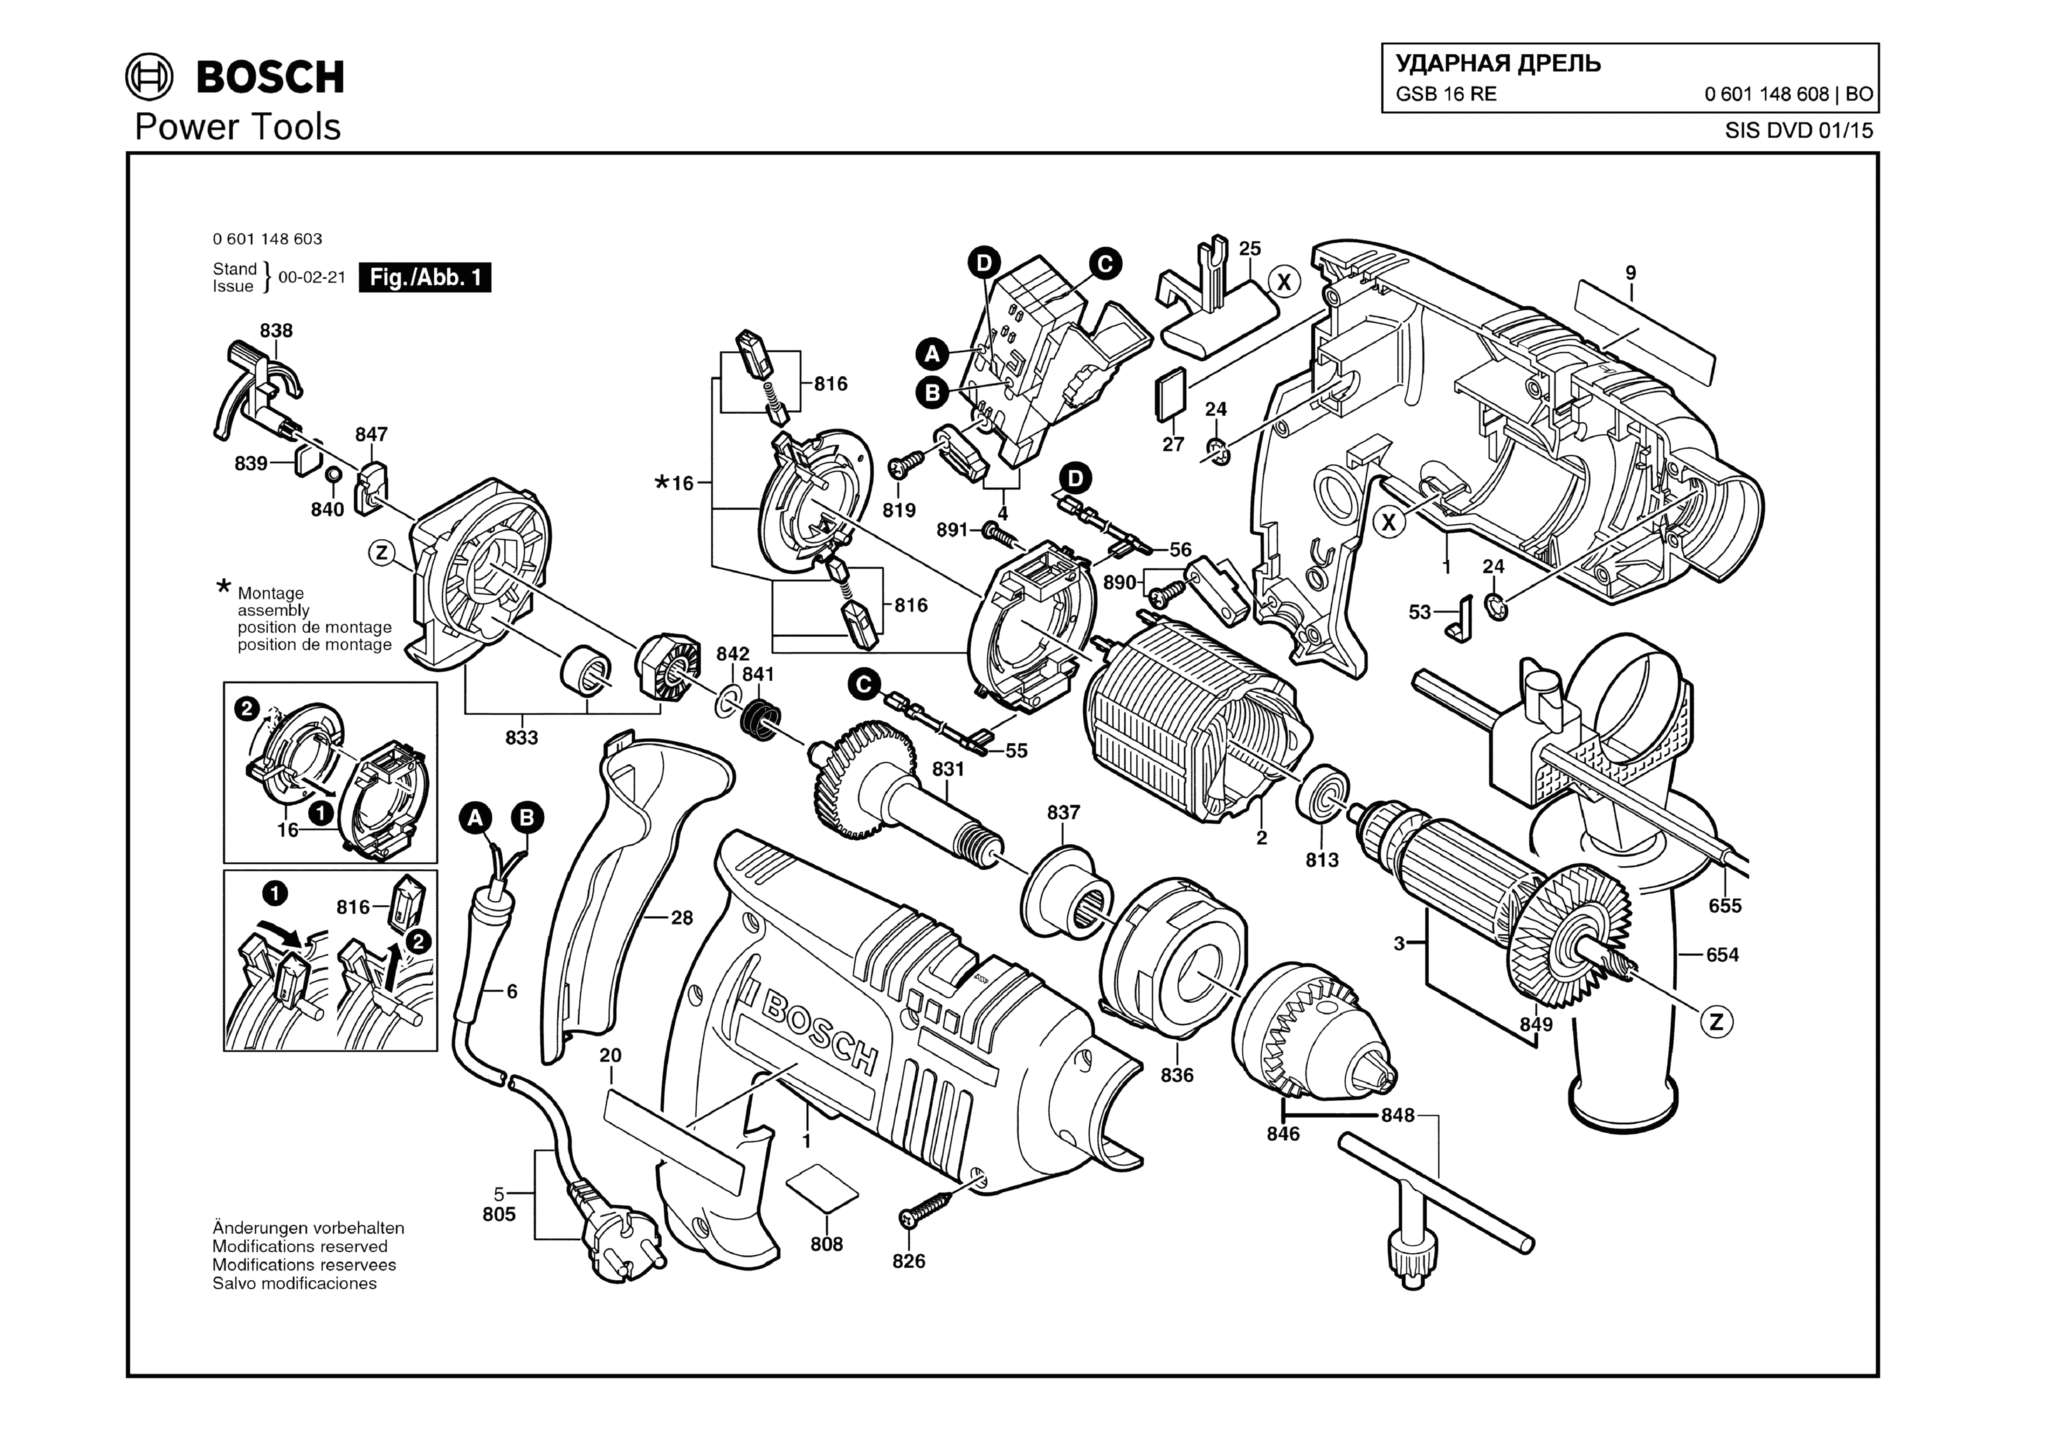 Запчасти, схема и деталировка Bosch GSB 16 RE (ТИП 0601148608)